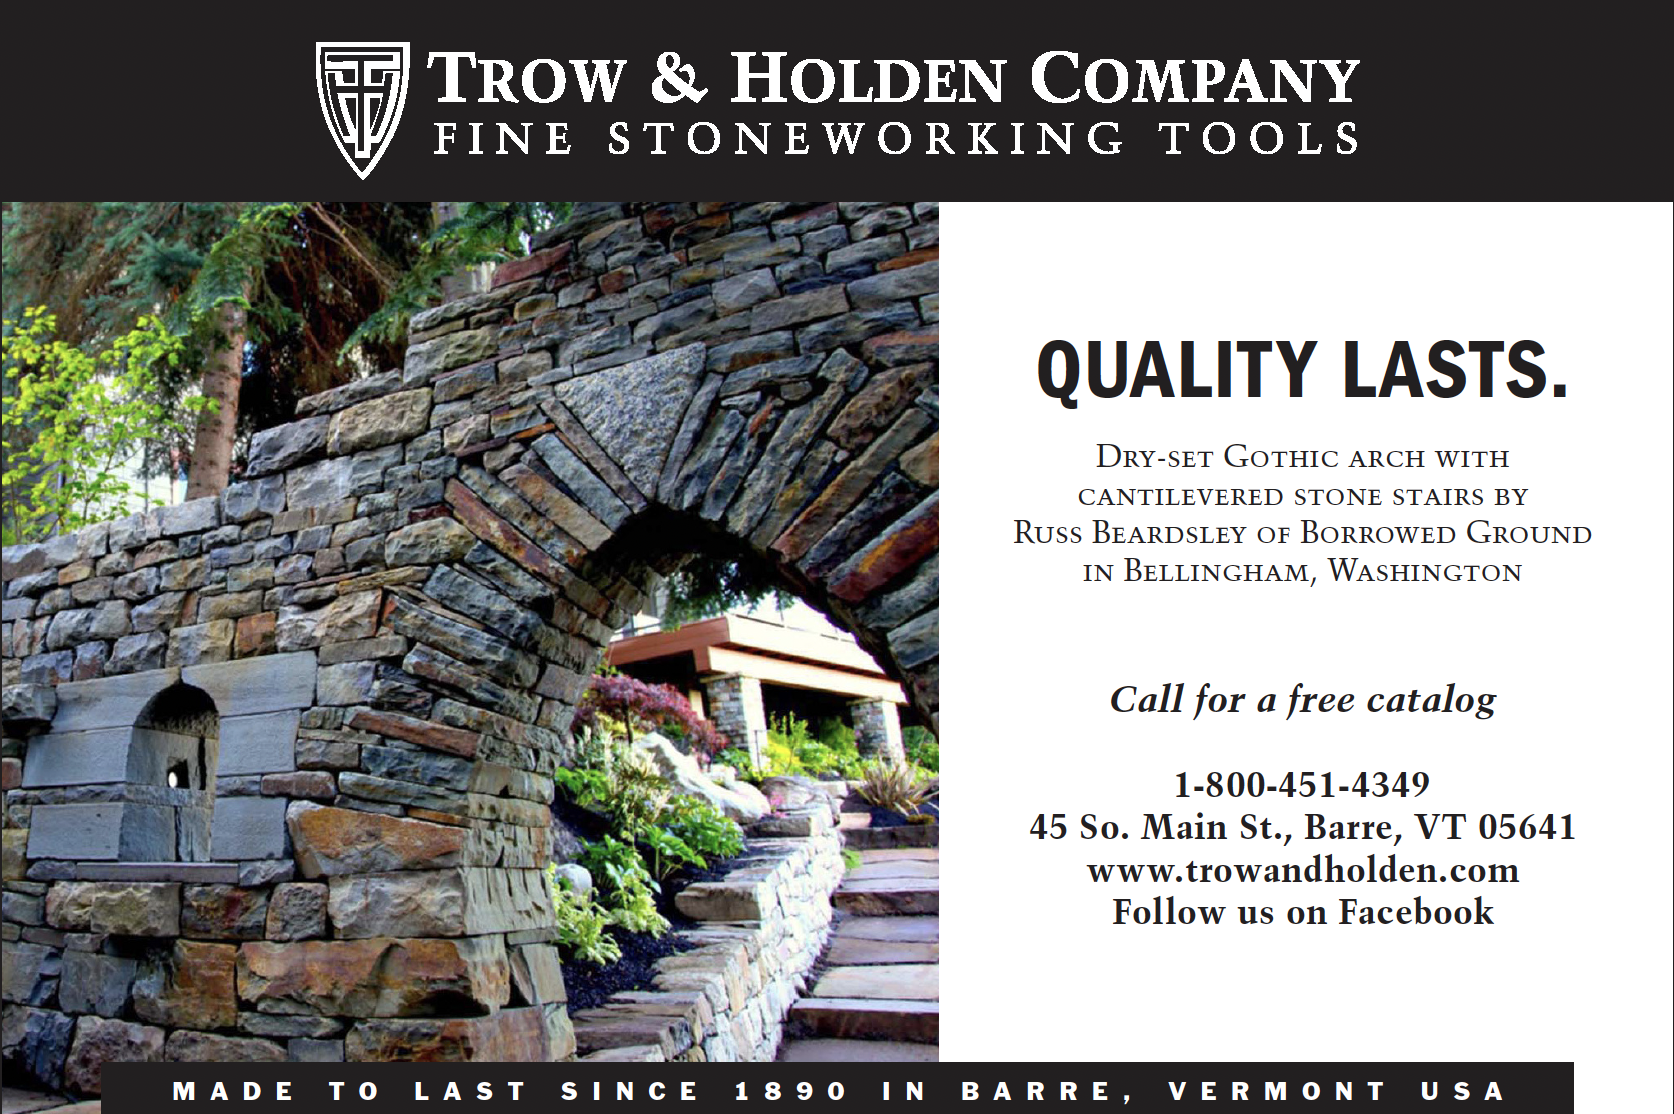 Trow & Holden Company Fine Stoneworking Tools